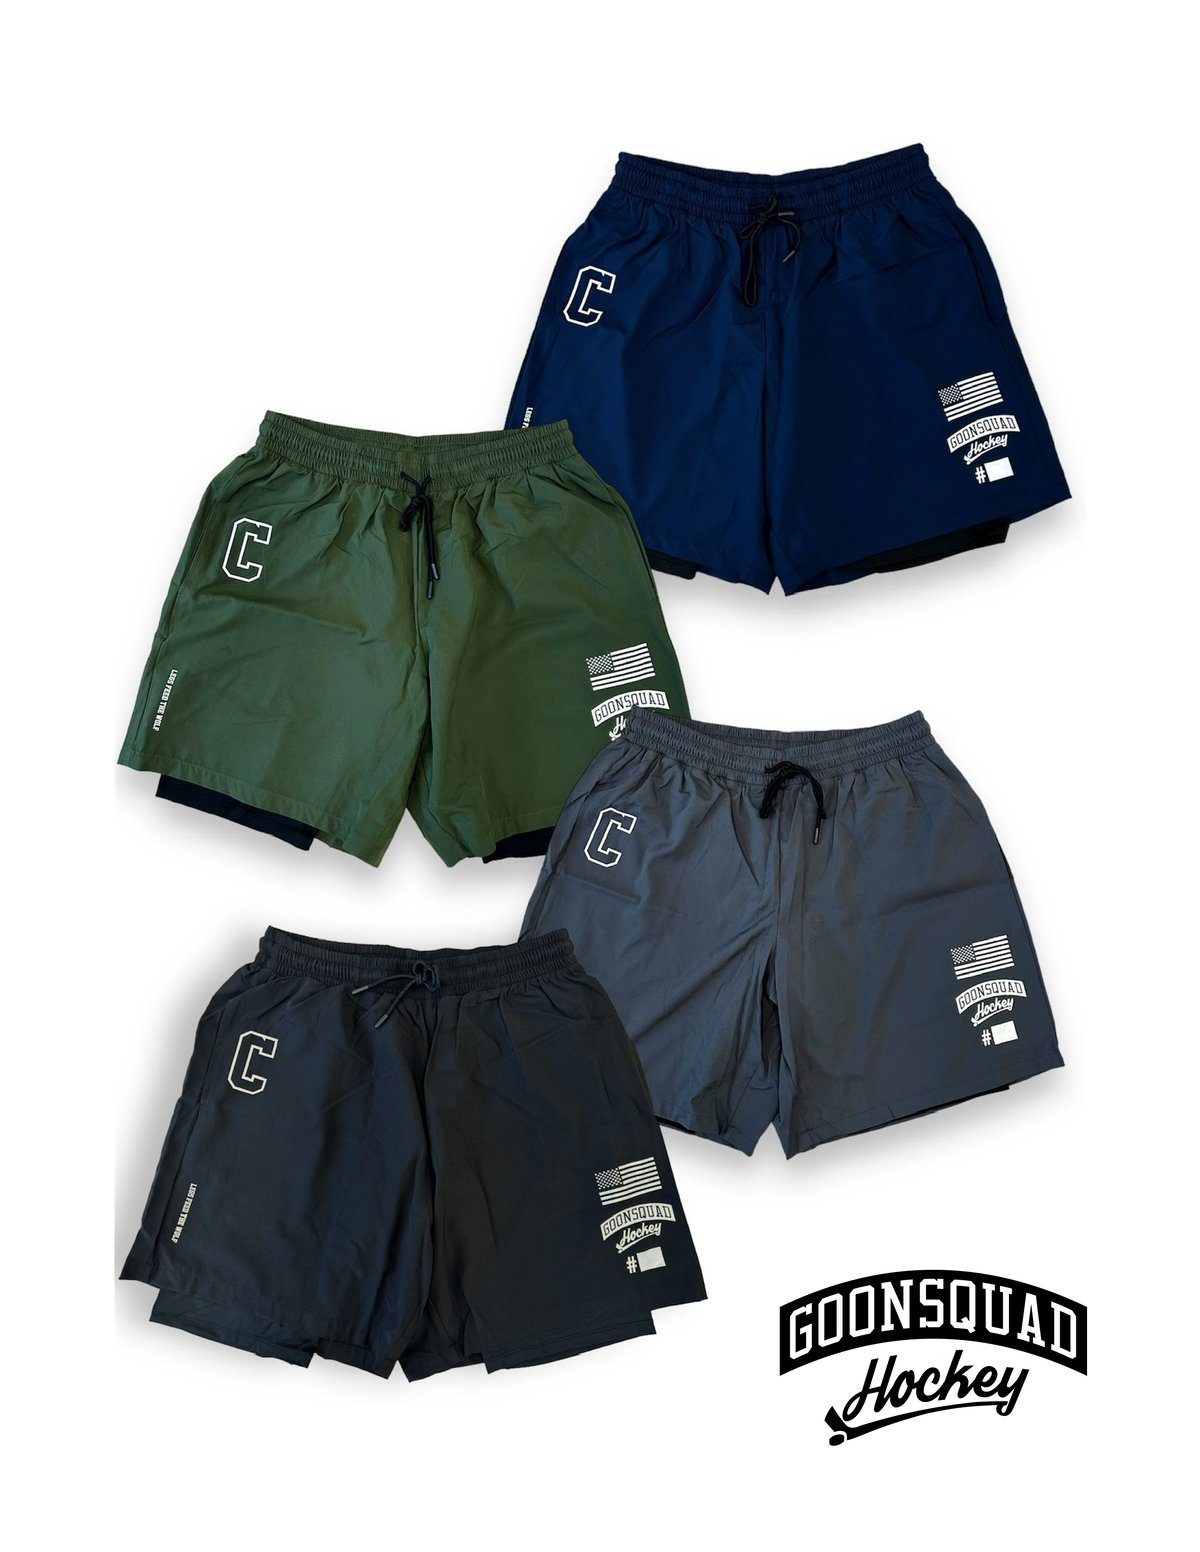 Goonsquad Trainer Shorts